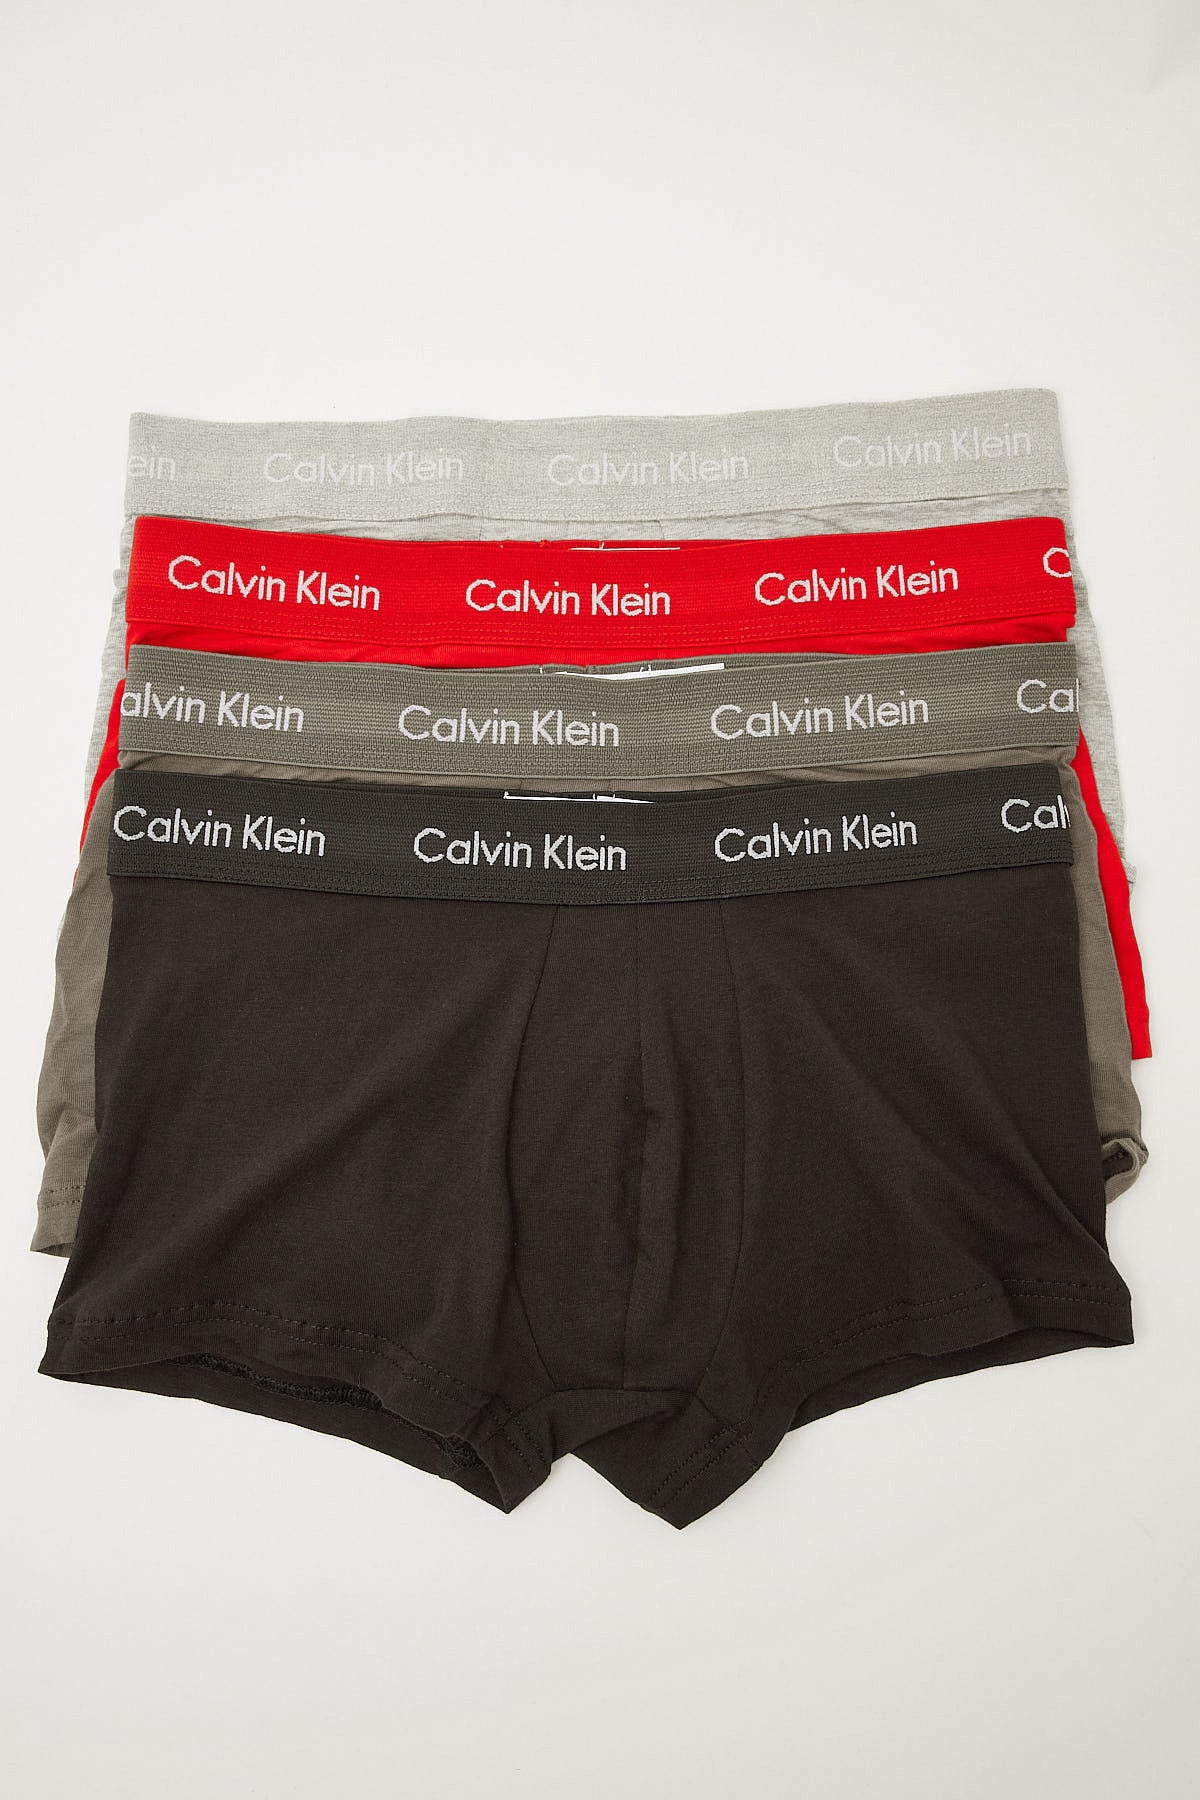 Calvin Klein Cotton Stretch Low Rise Trunk 4 Pack Black/Rustic Red/Grey Hthr/Platinum